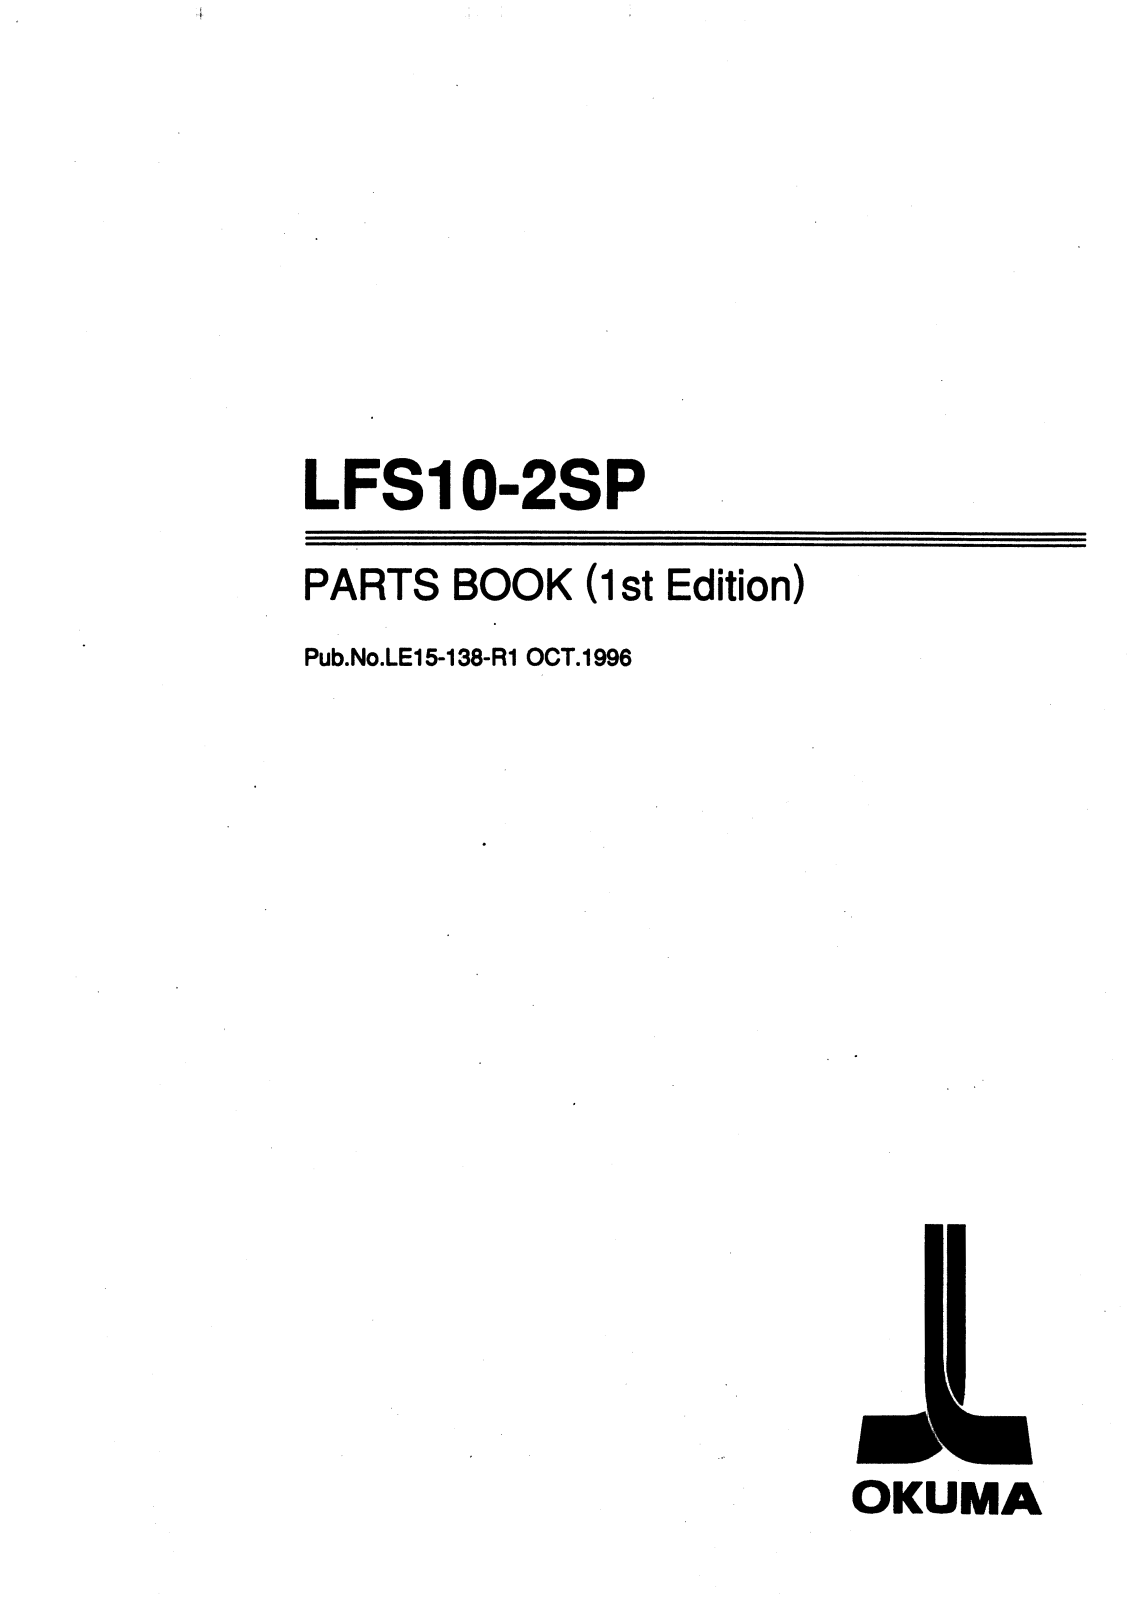 okuma LFS10-2SP User Manual